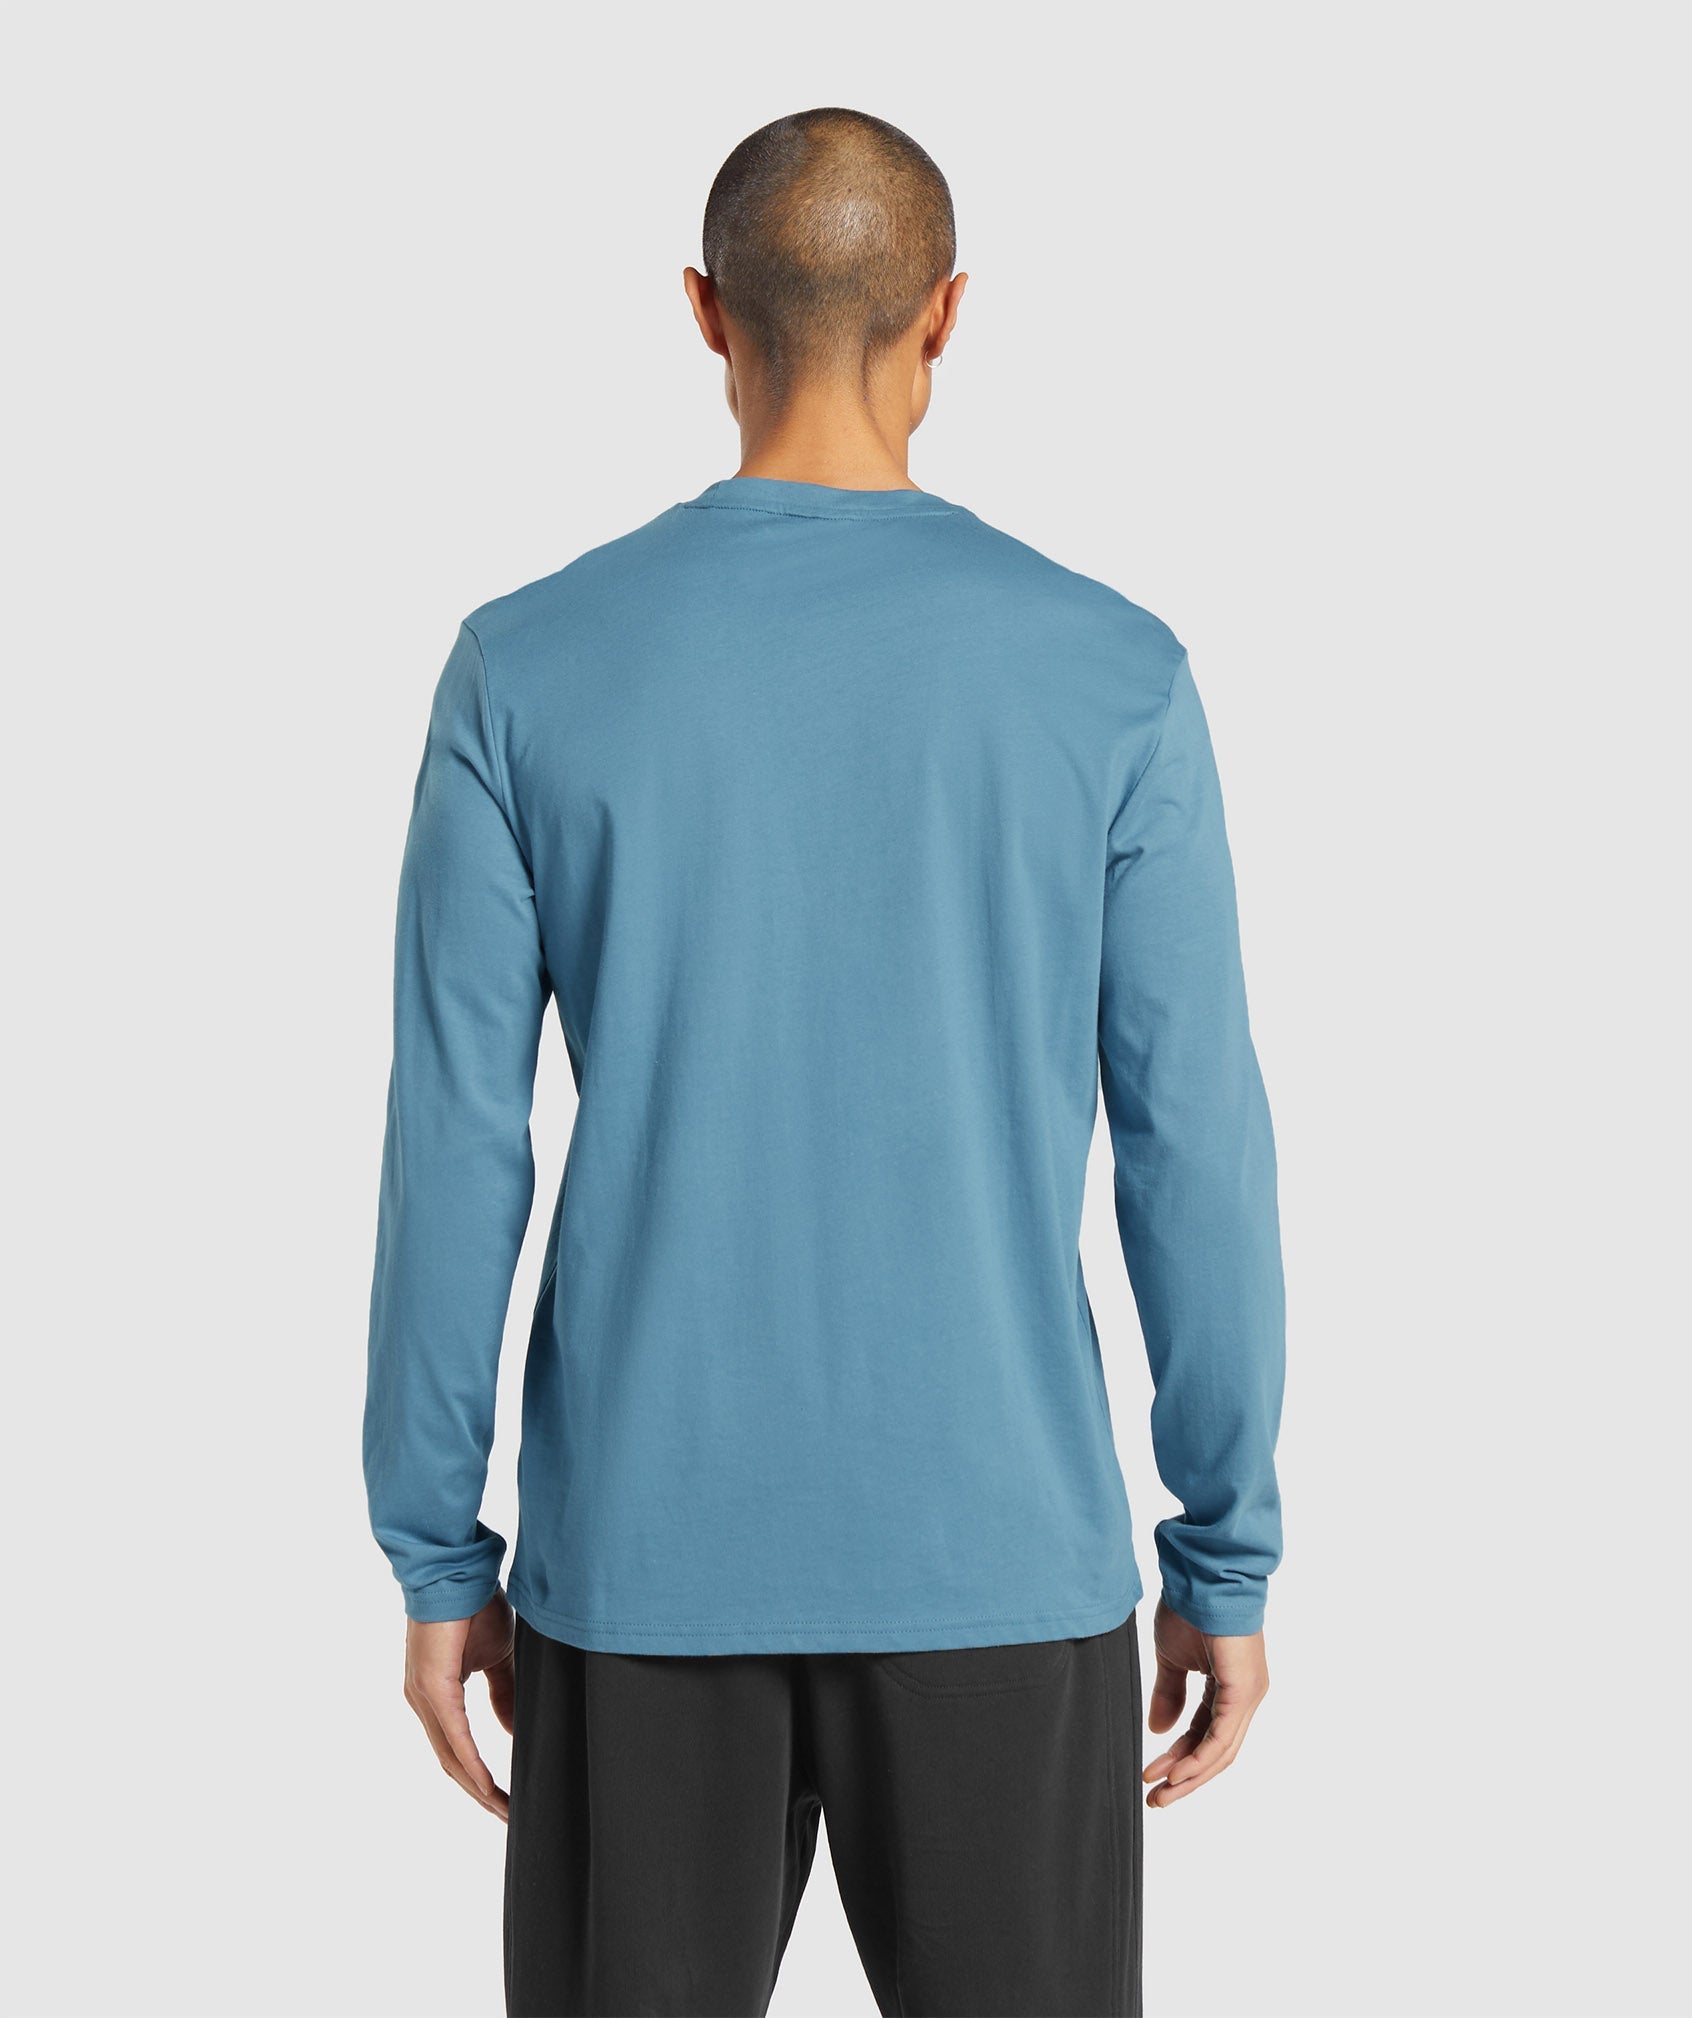 NEW Men's GYMSHARK Arrival Long Sleeve Shirt Aqua Green Performance Top Sz  XXL